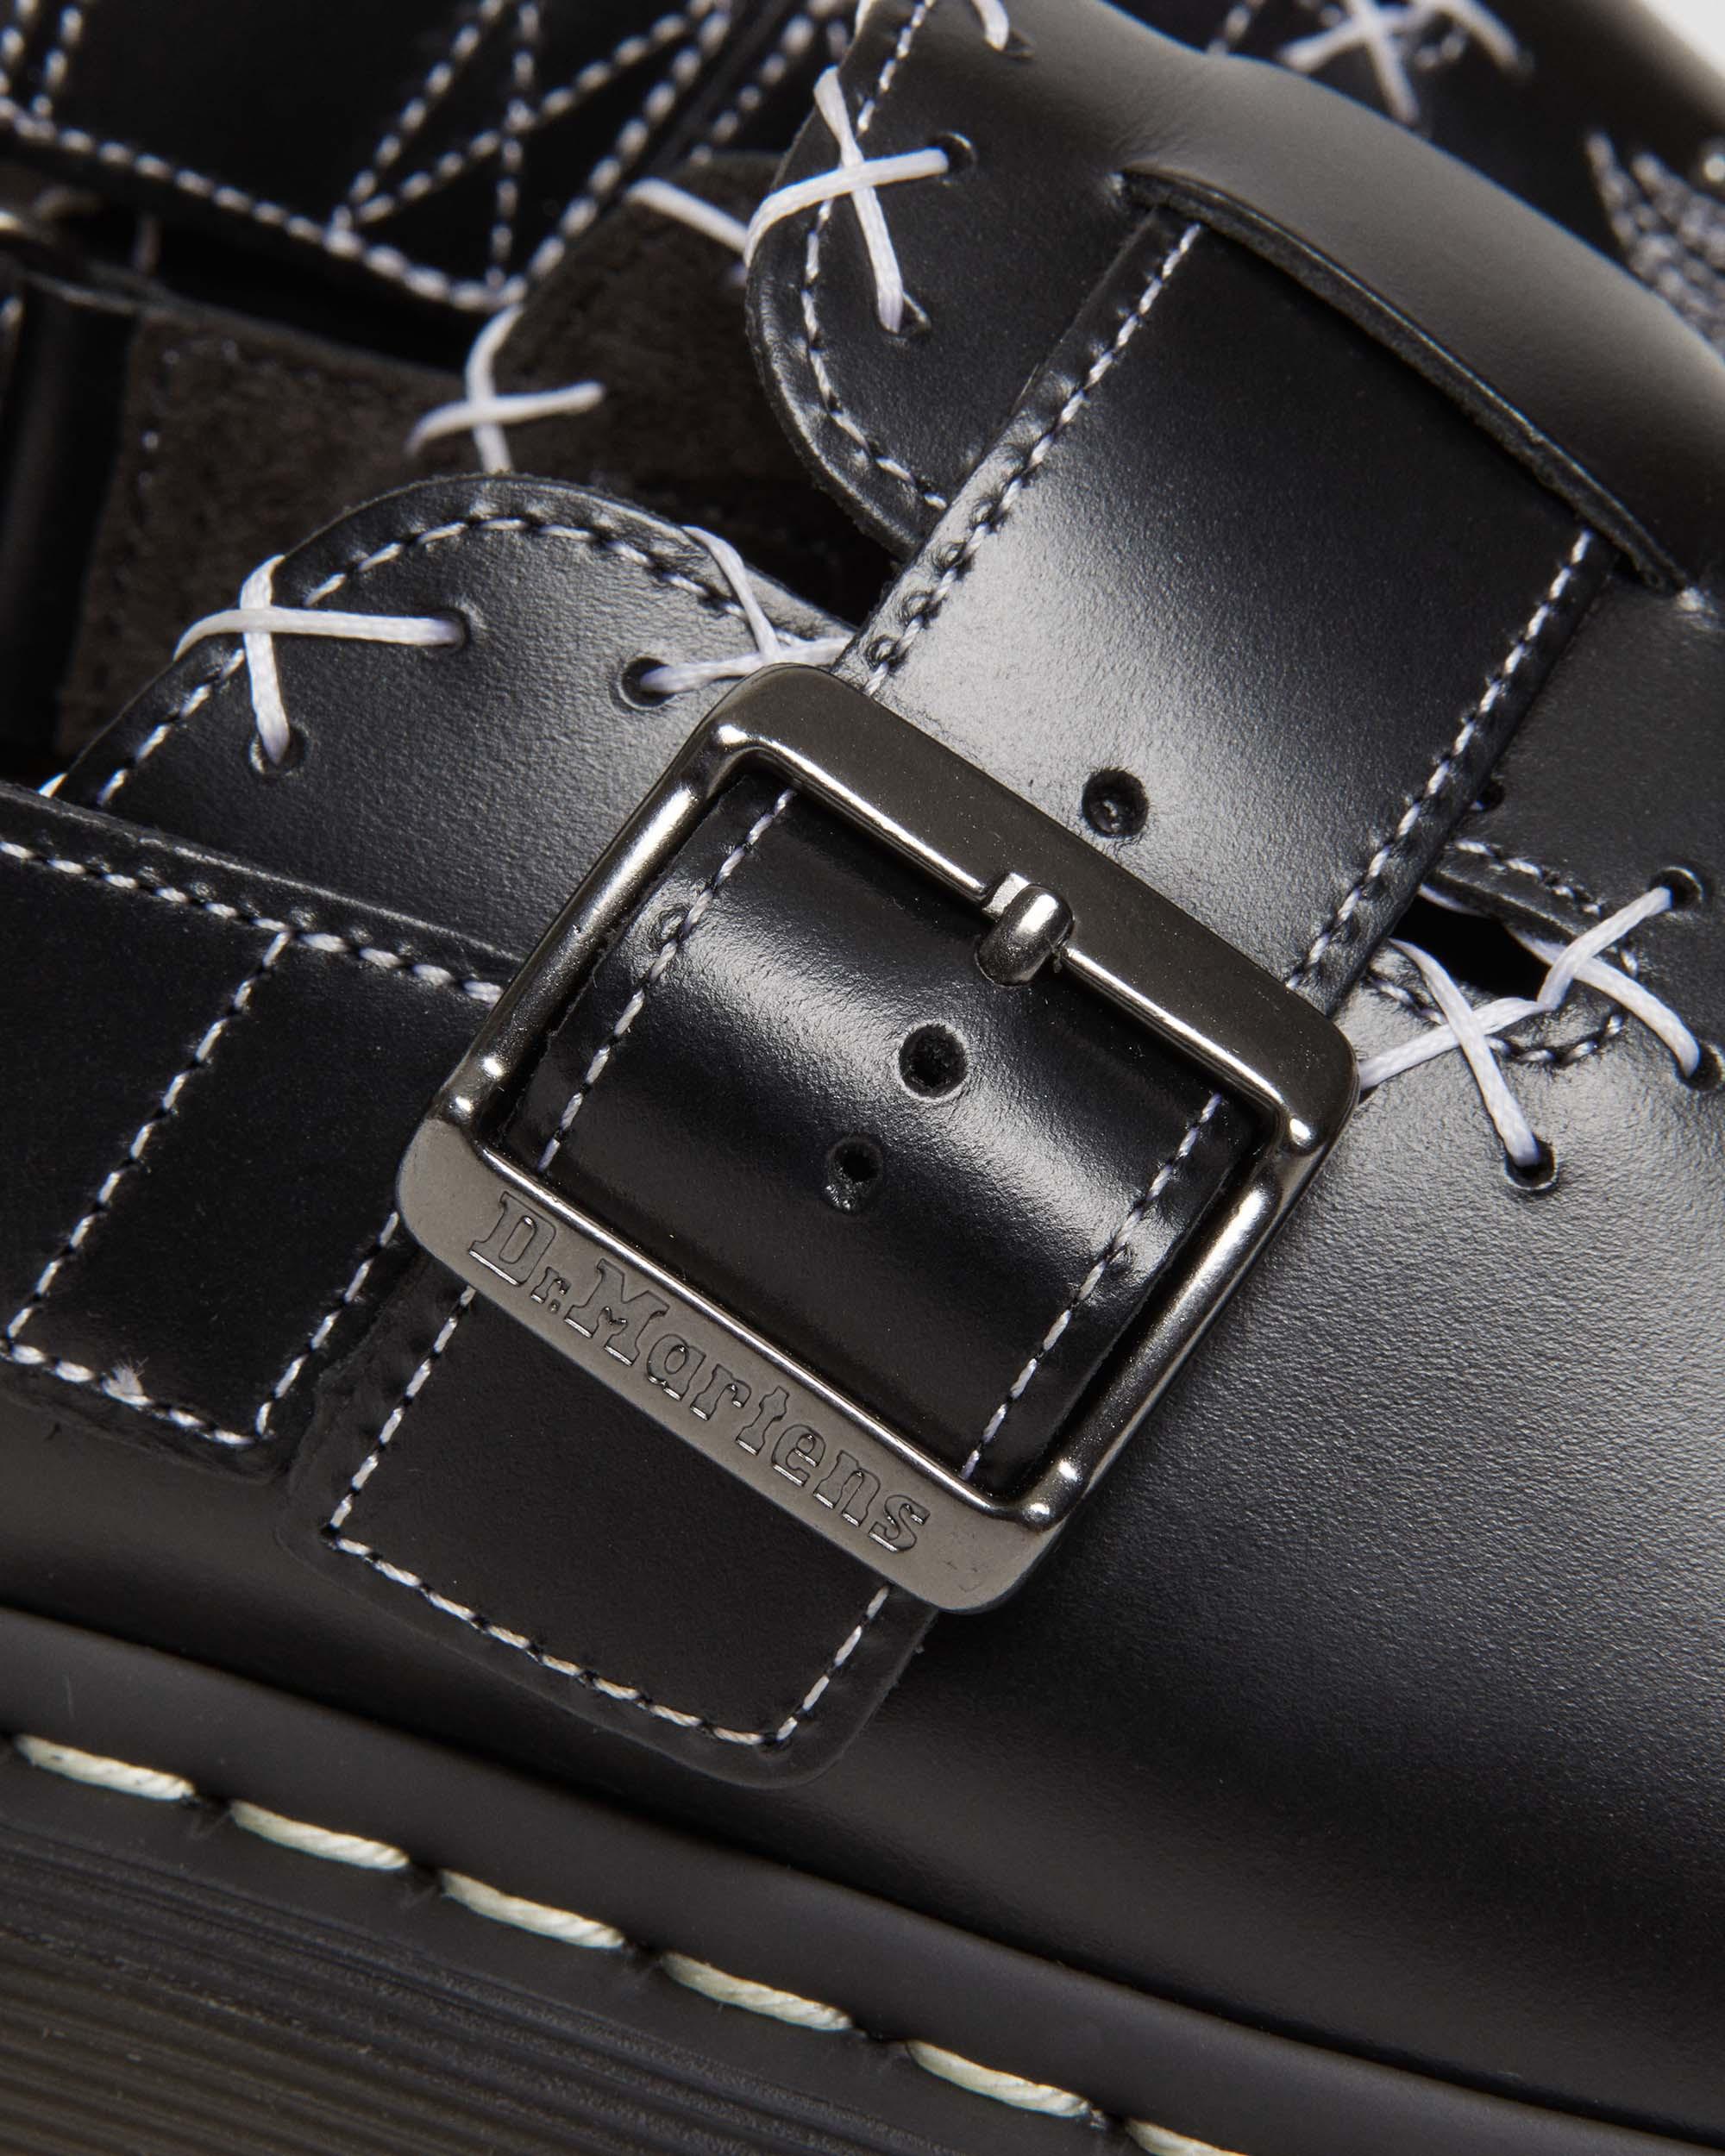 Jorge Contrast Stitch Leather Mules in Black